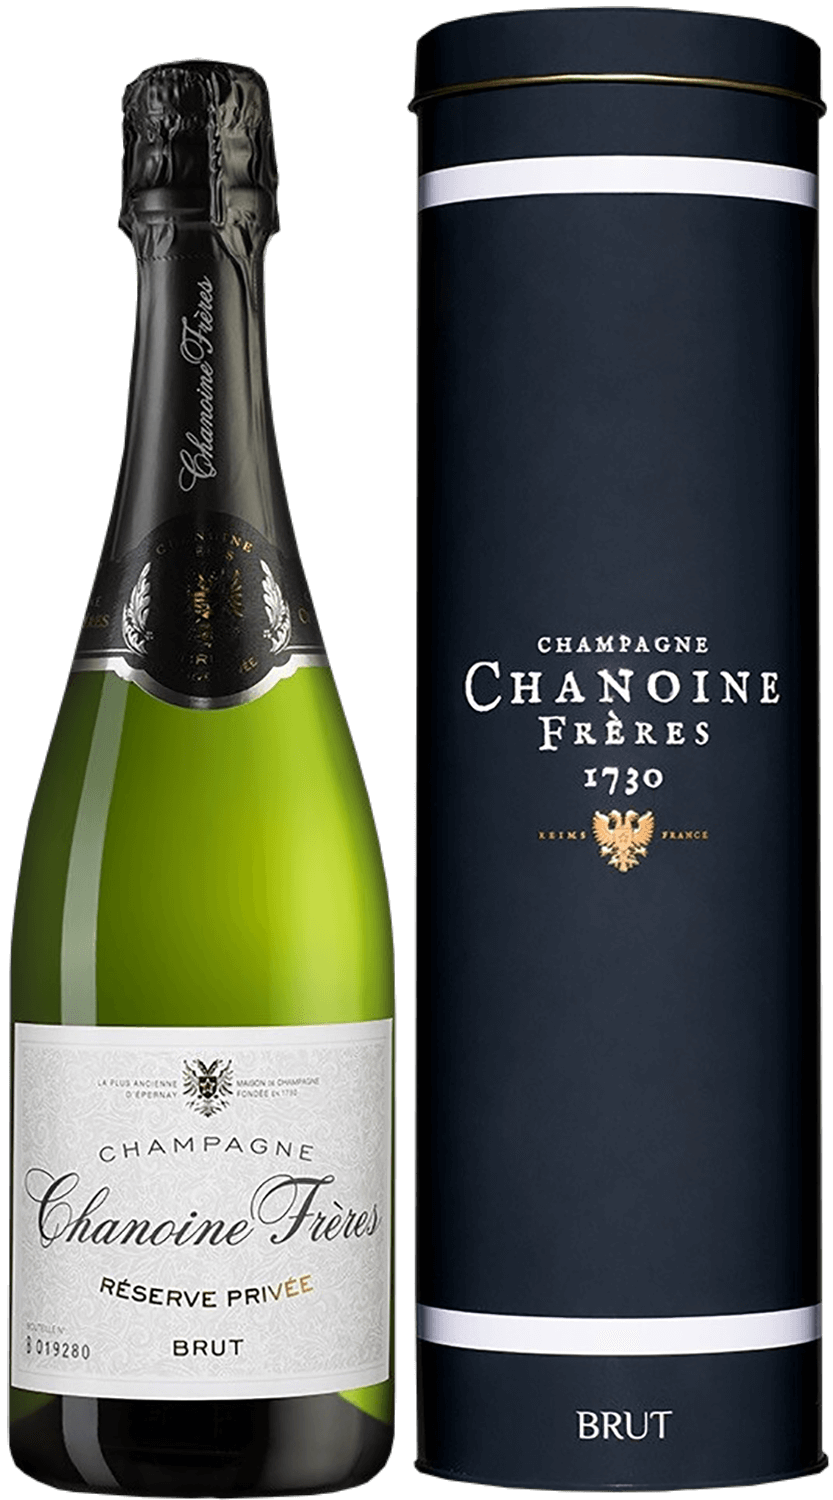 Reserve Privee Brut Champagne AOC Chanoine Freres (gift box) rosé de meunier extra brut champagne aoс laherte freres